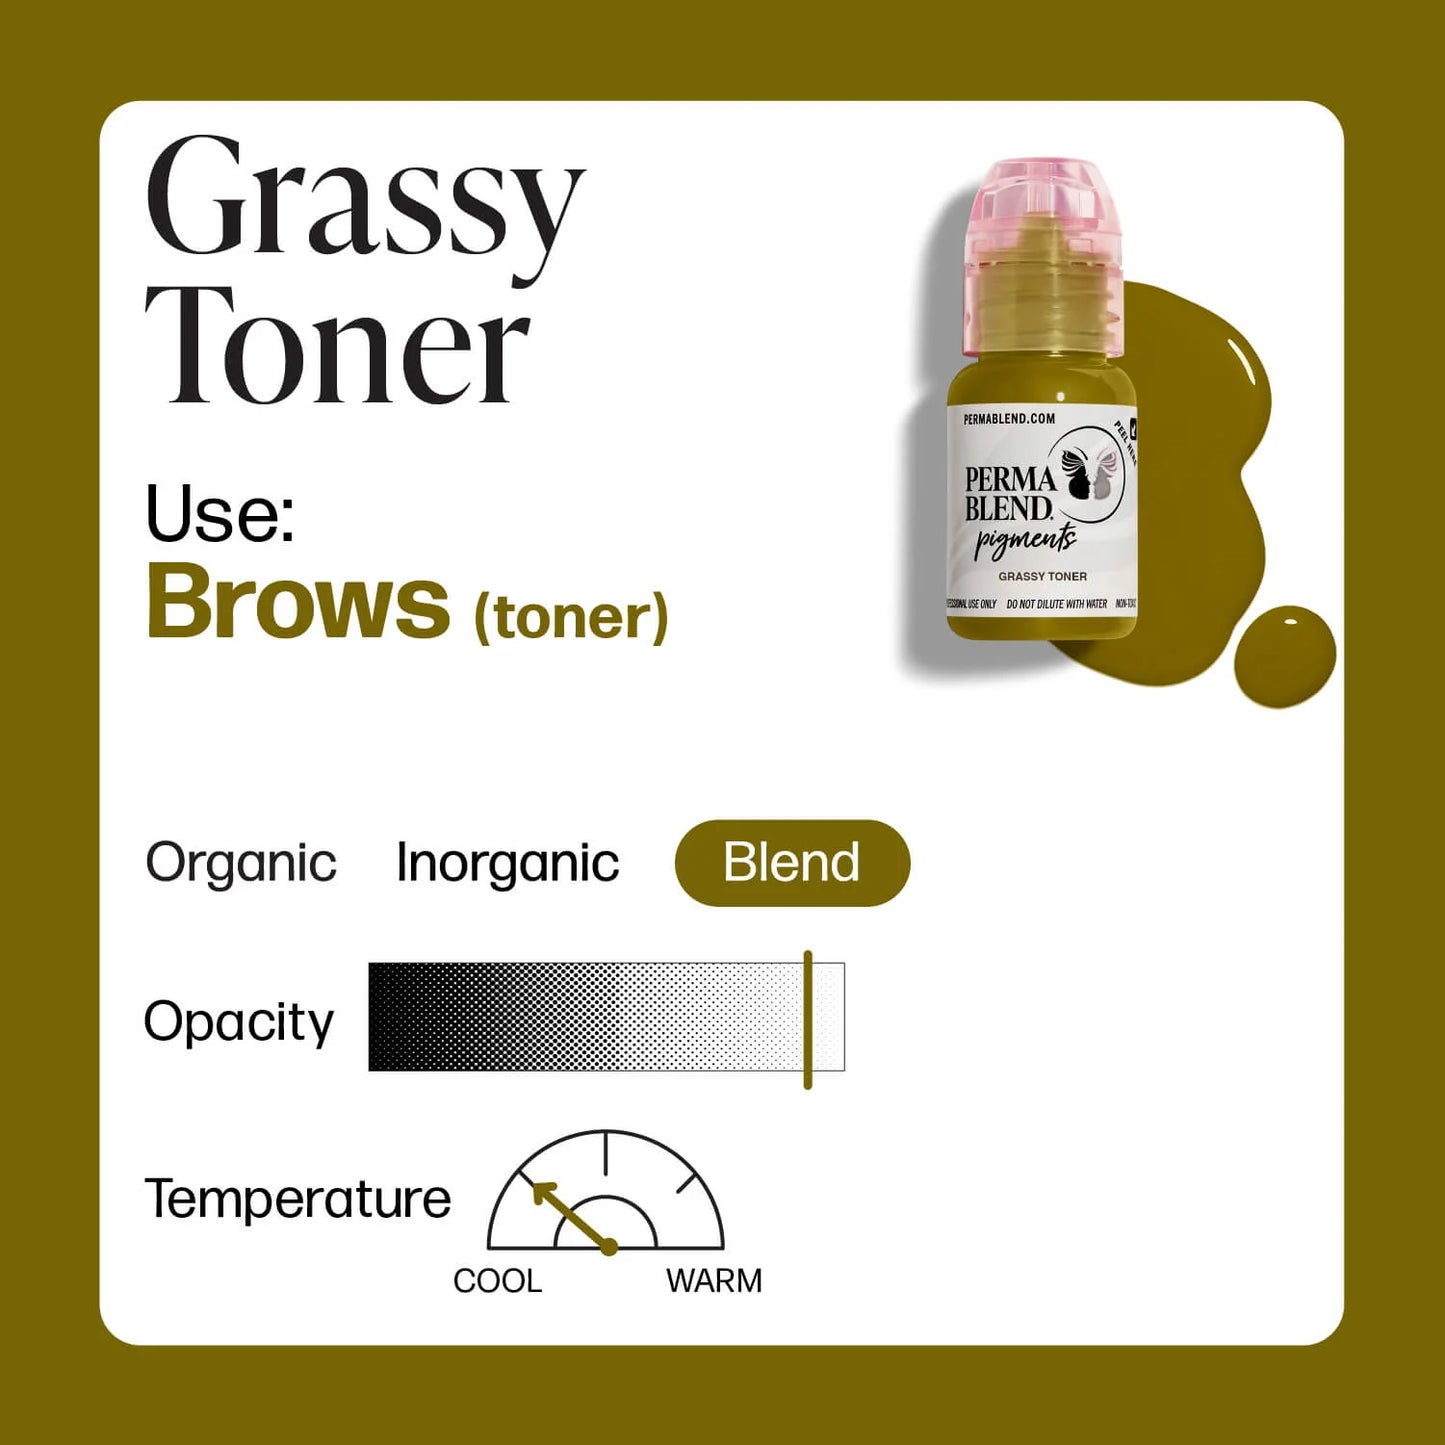 Grassy Toner